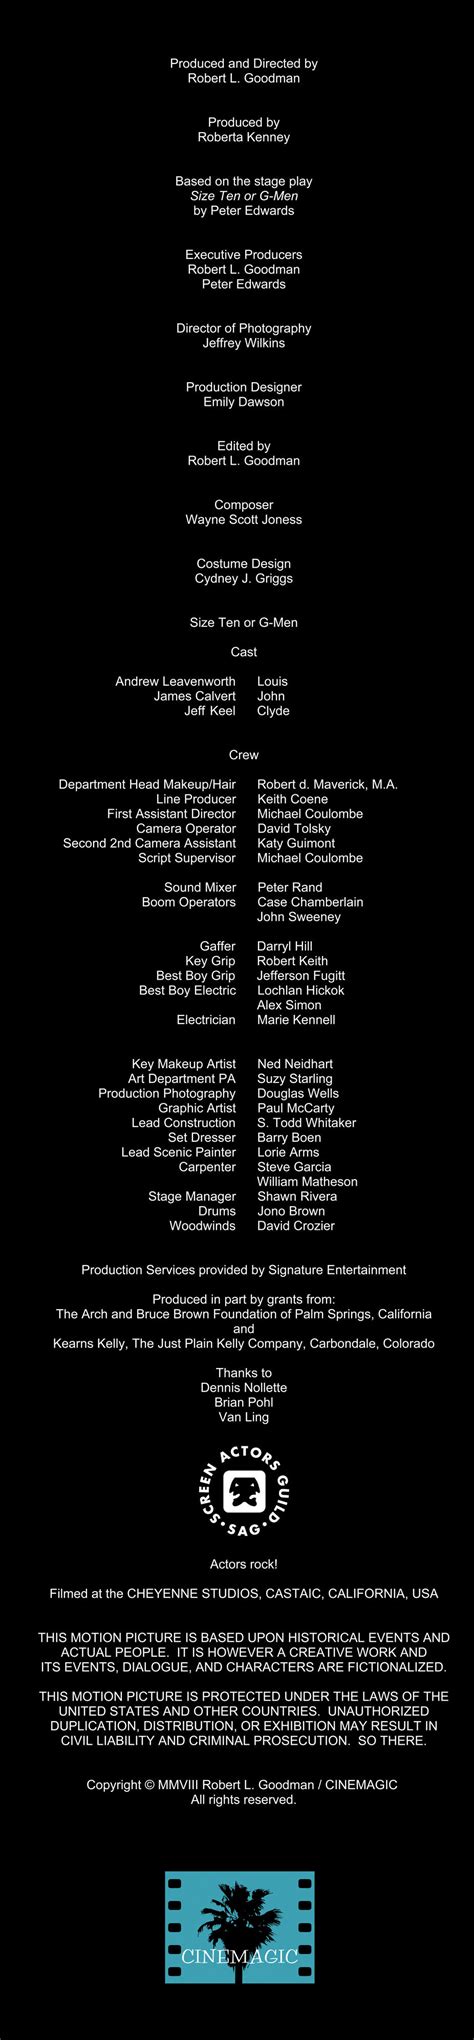 Formula 1 lyrics credits, cast, crew of song